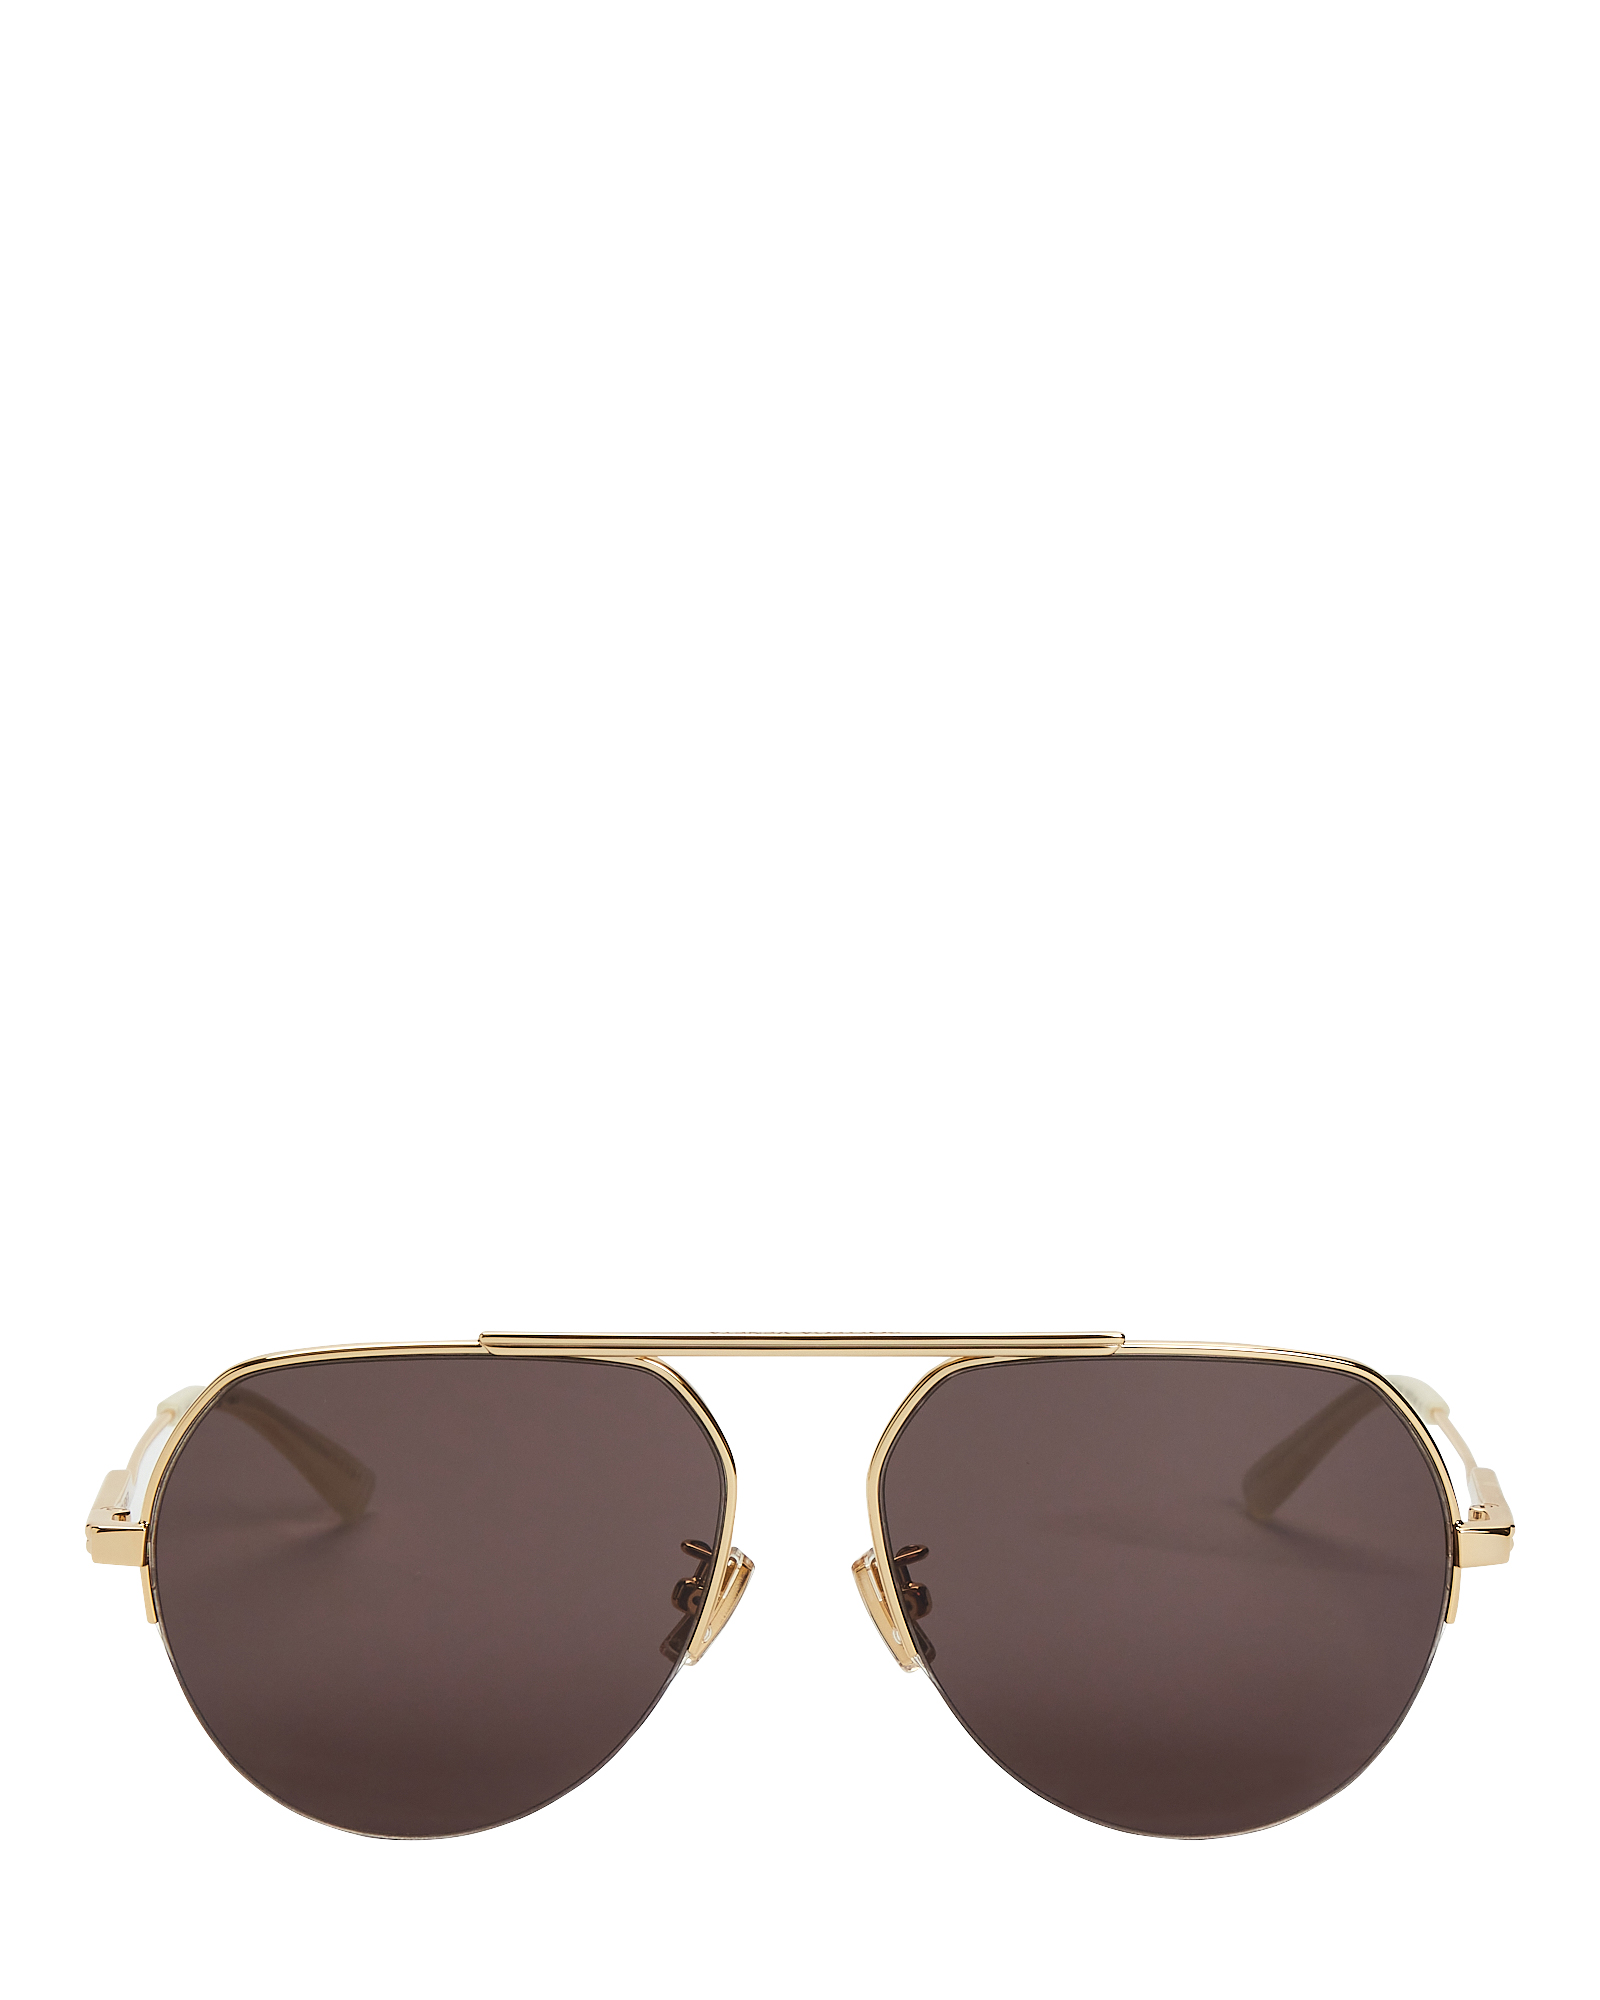 Bottega Veneta Aviator Tinted Sunglasses | INTERMIX®